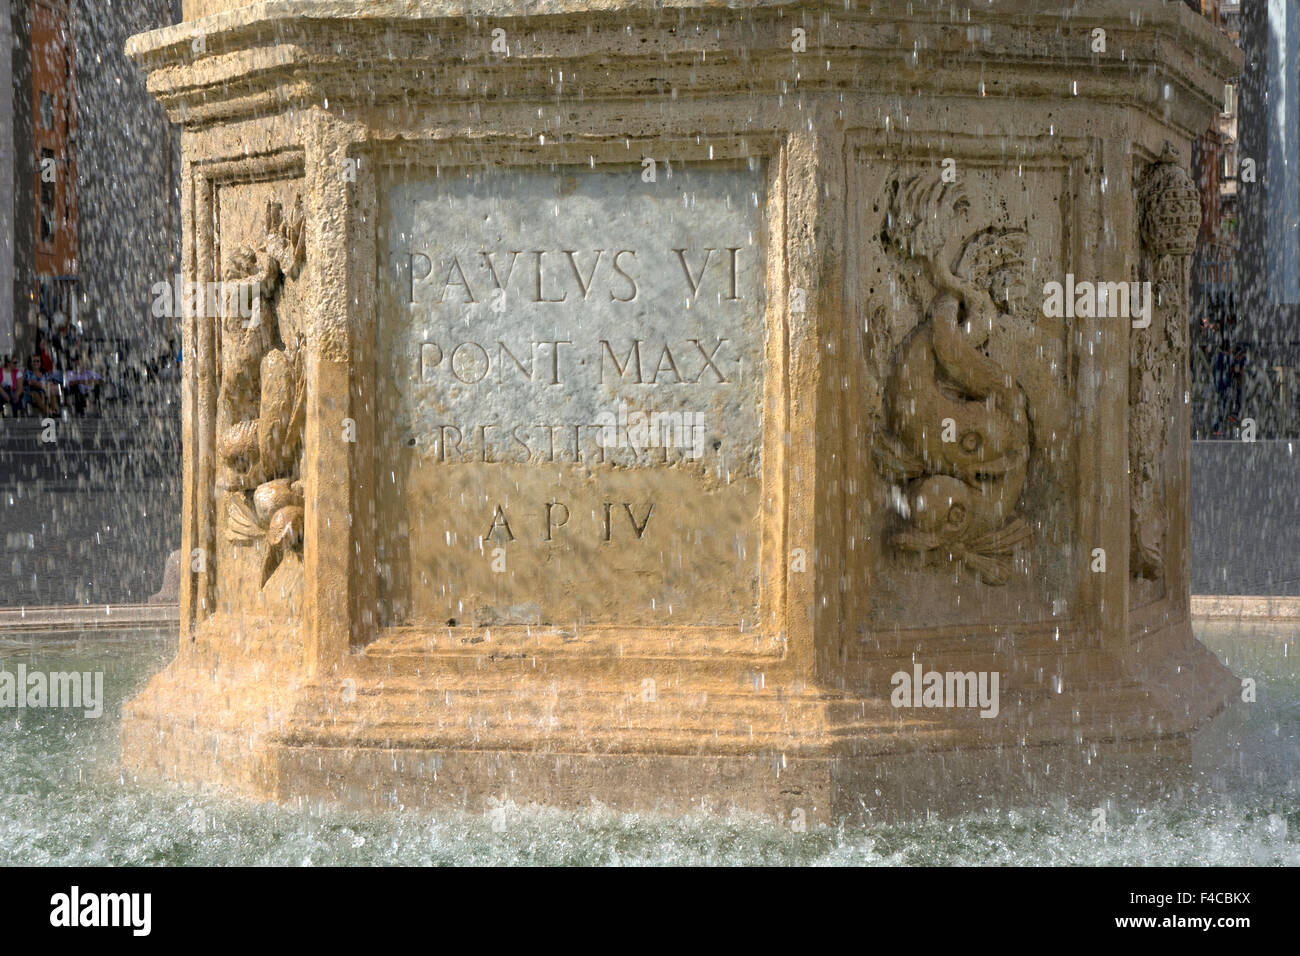 En dehors de la fontaine Maderno Vatican, Rome, Italie Banque D'Images